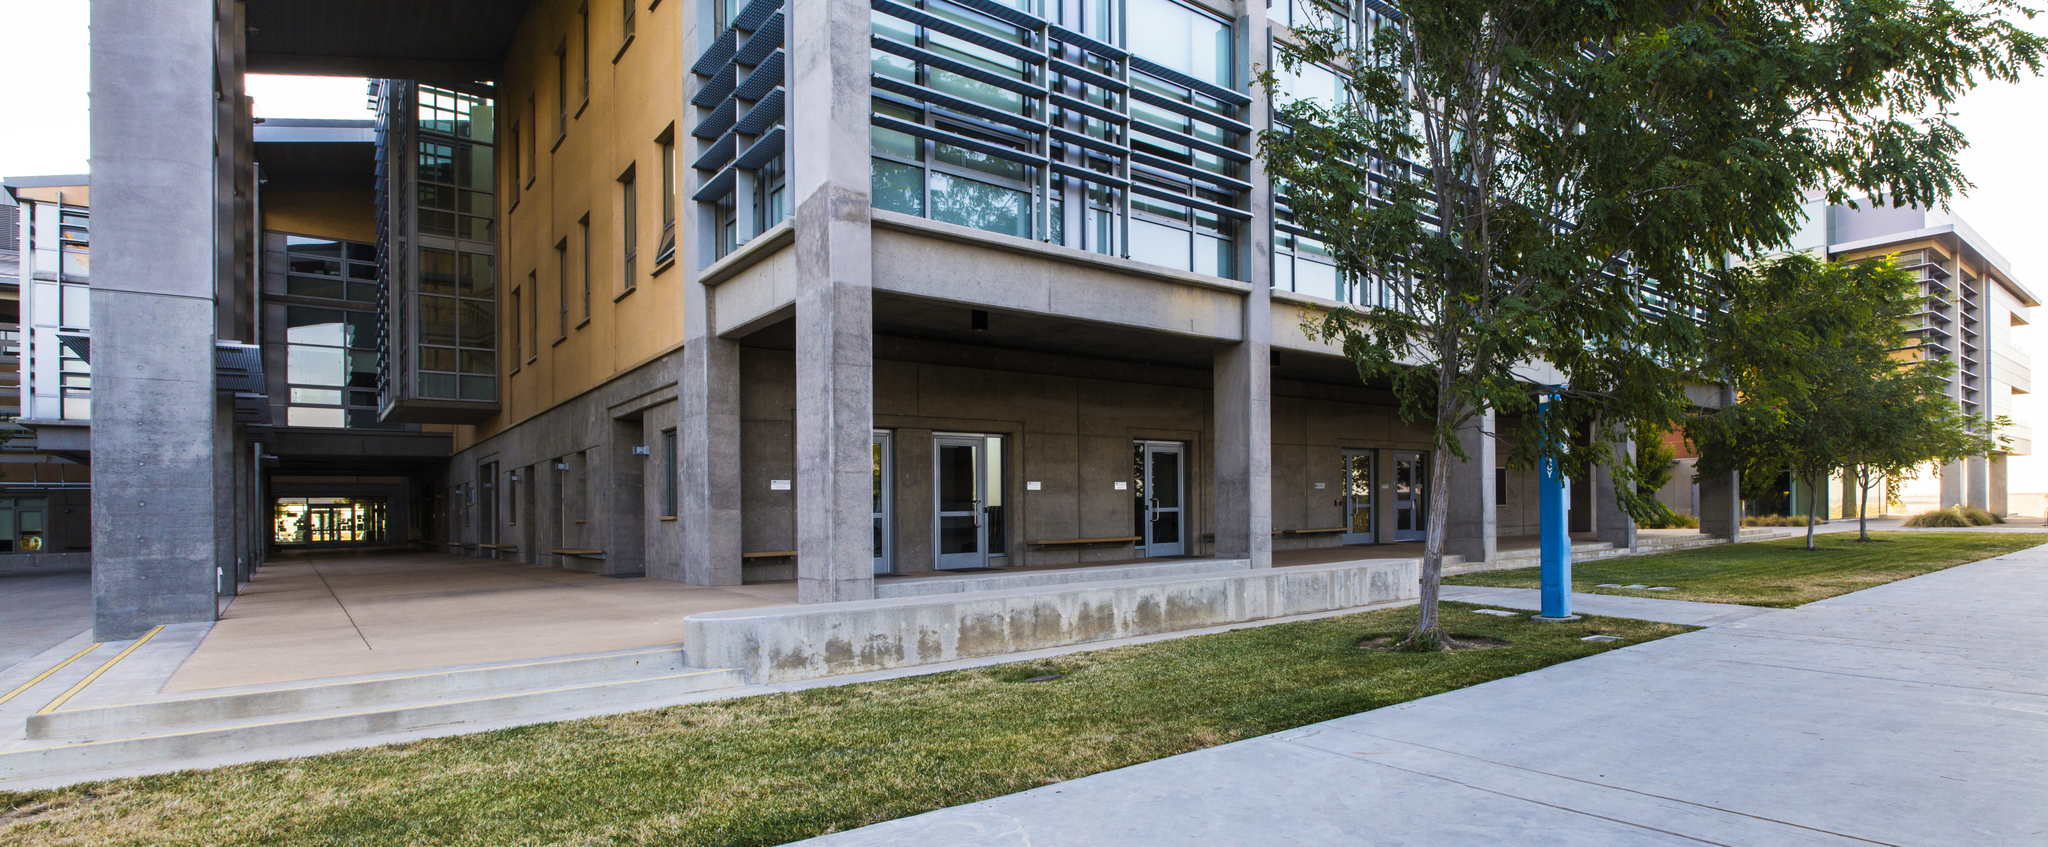 picture of campus building